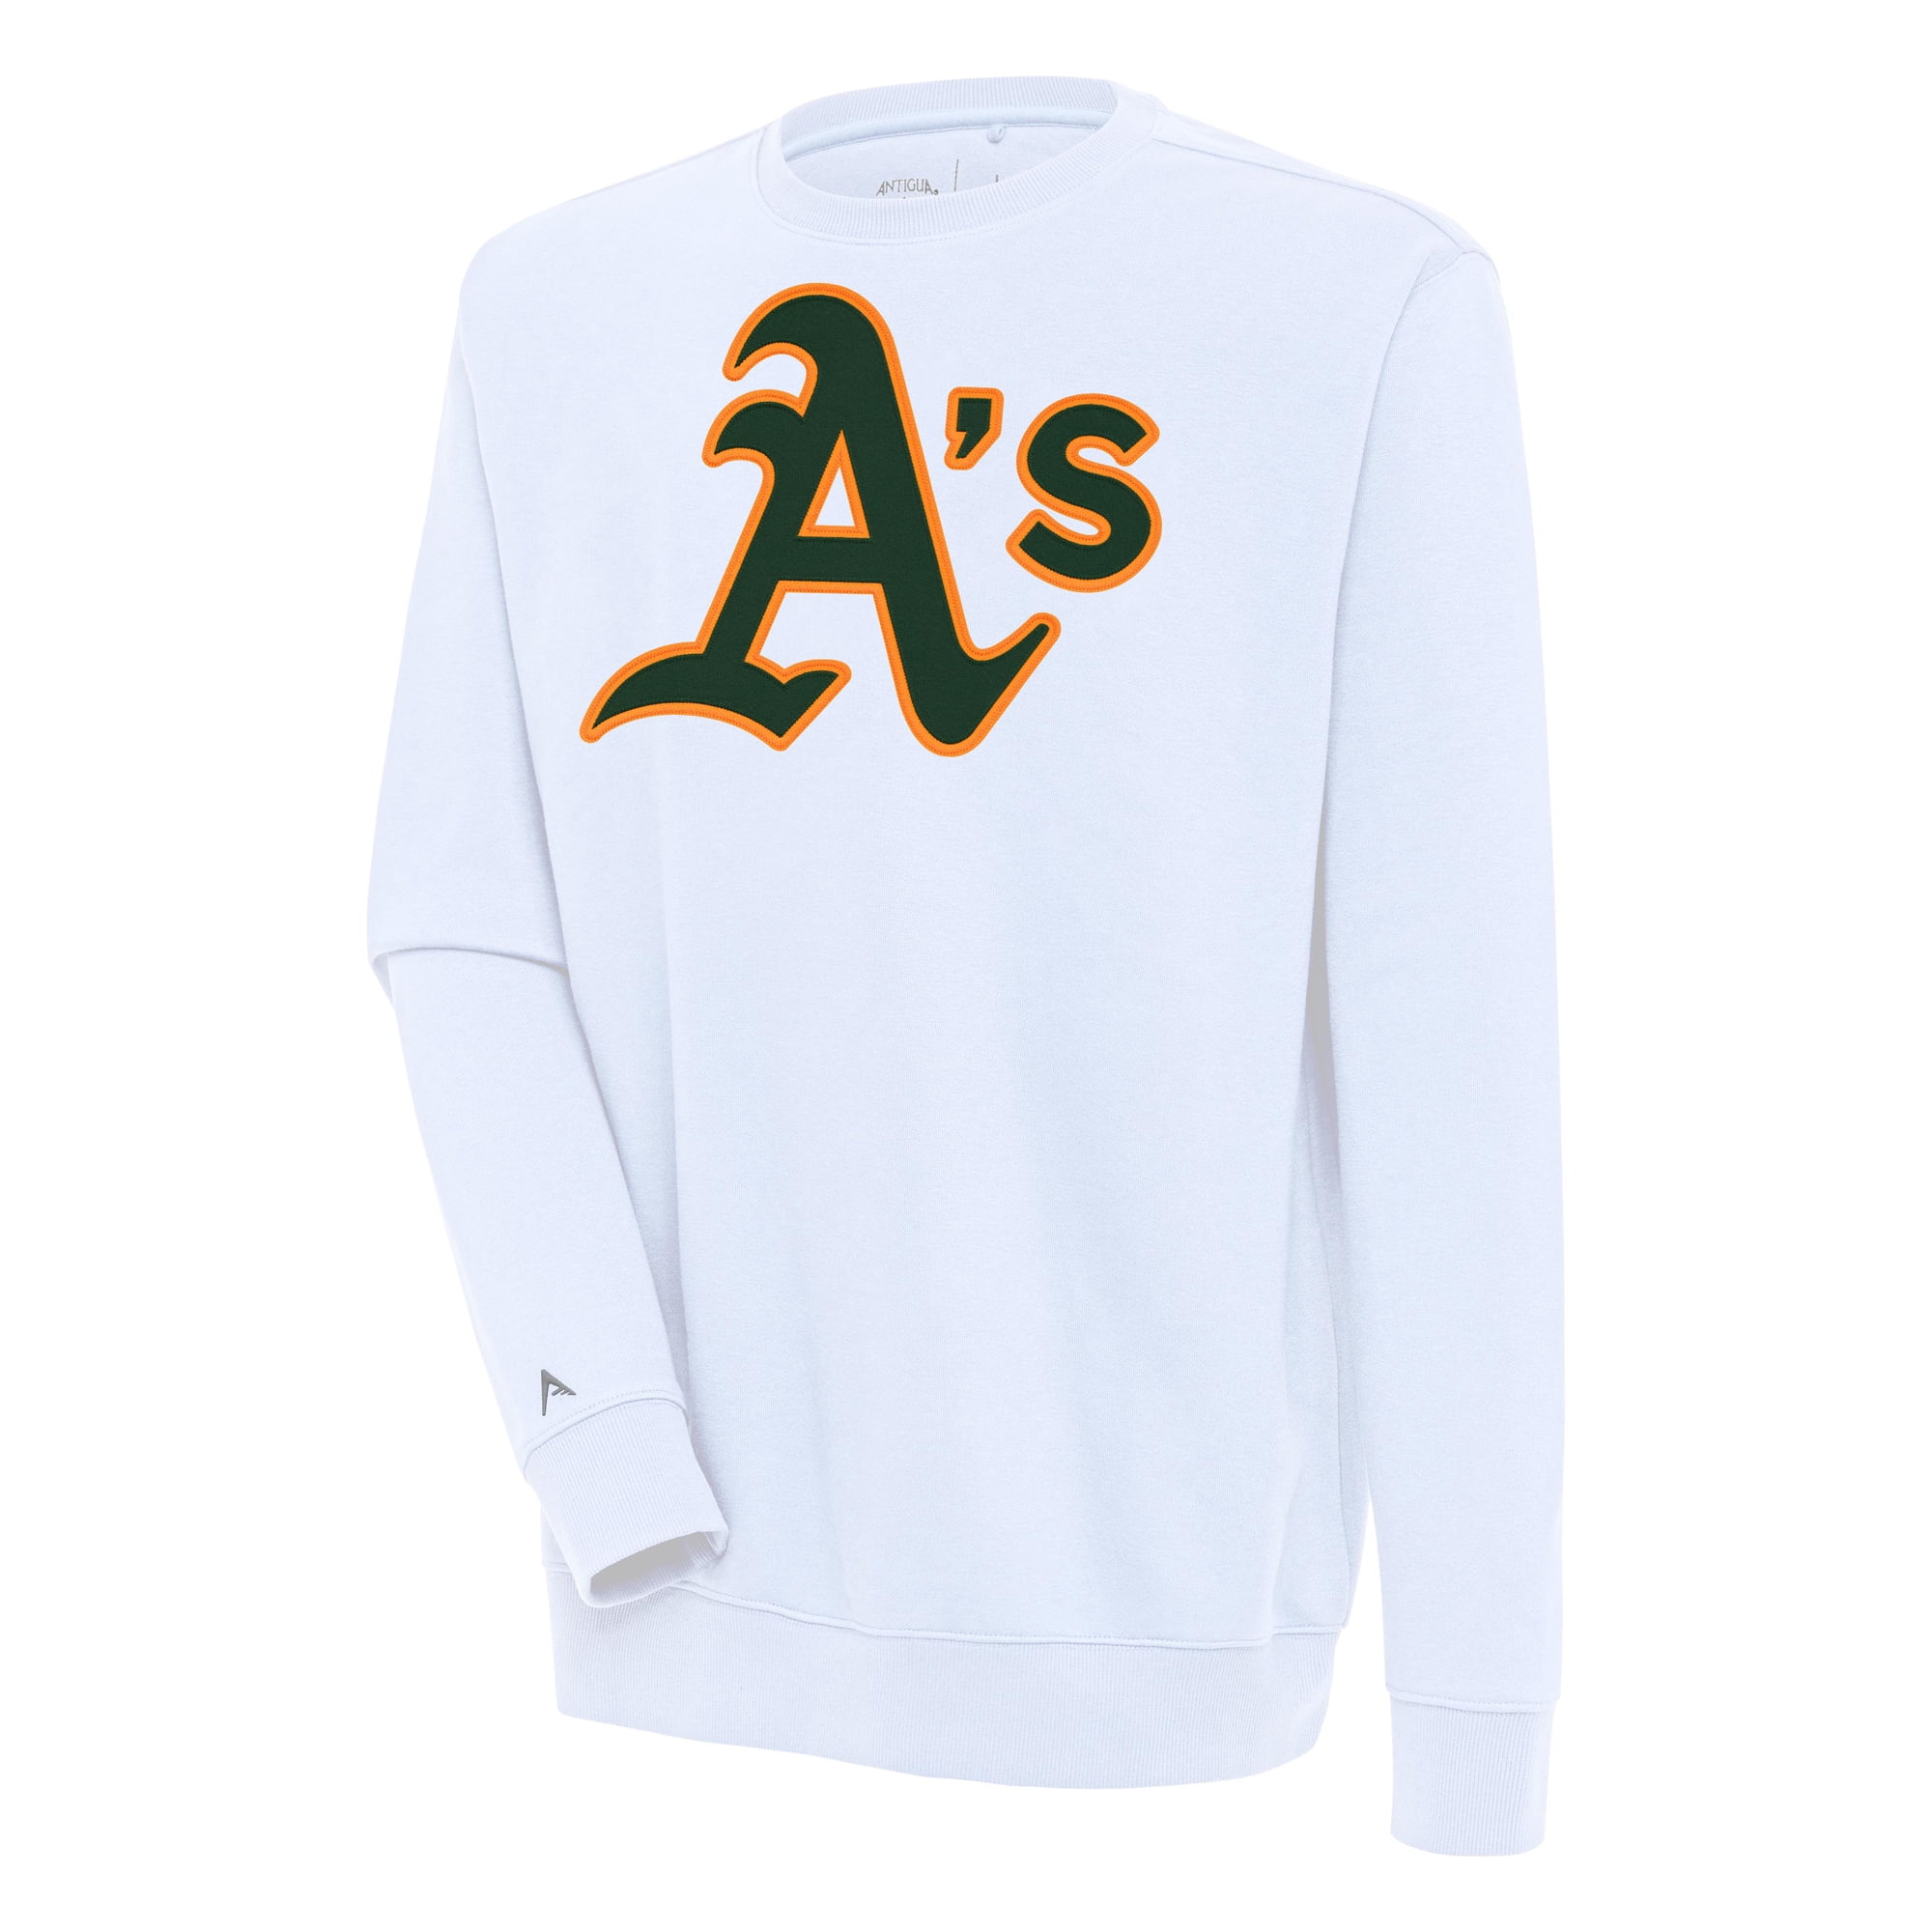 A's Oakland Athletics T Shirts, Hoodies, Sweatshirts & Merch